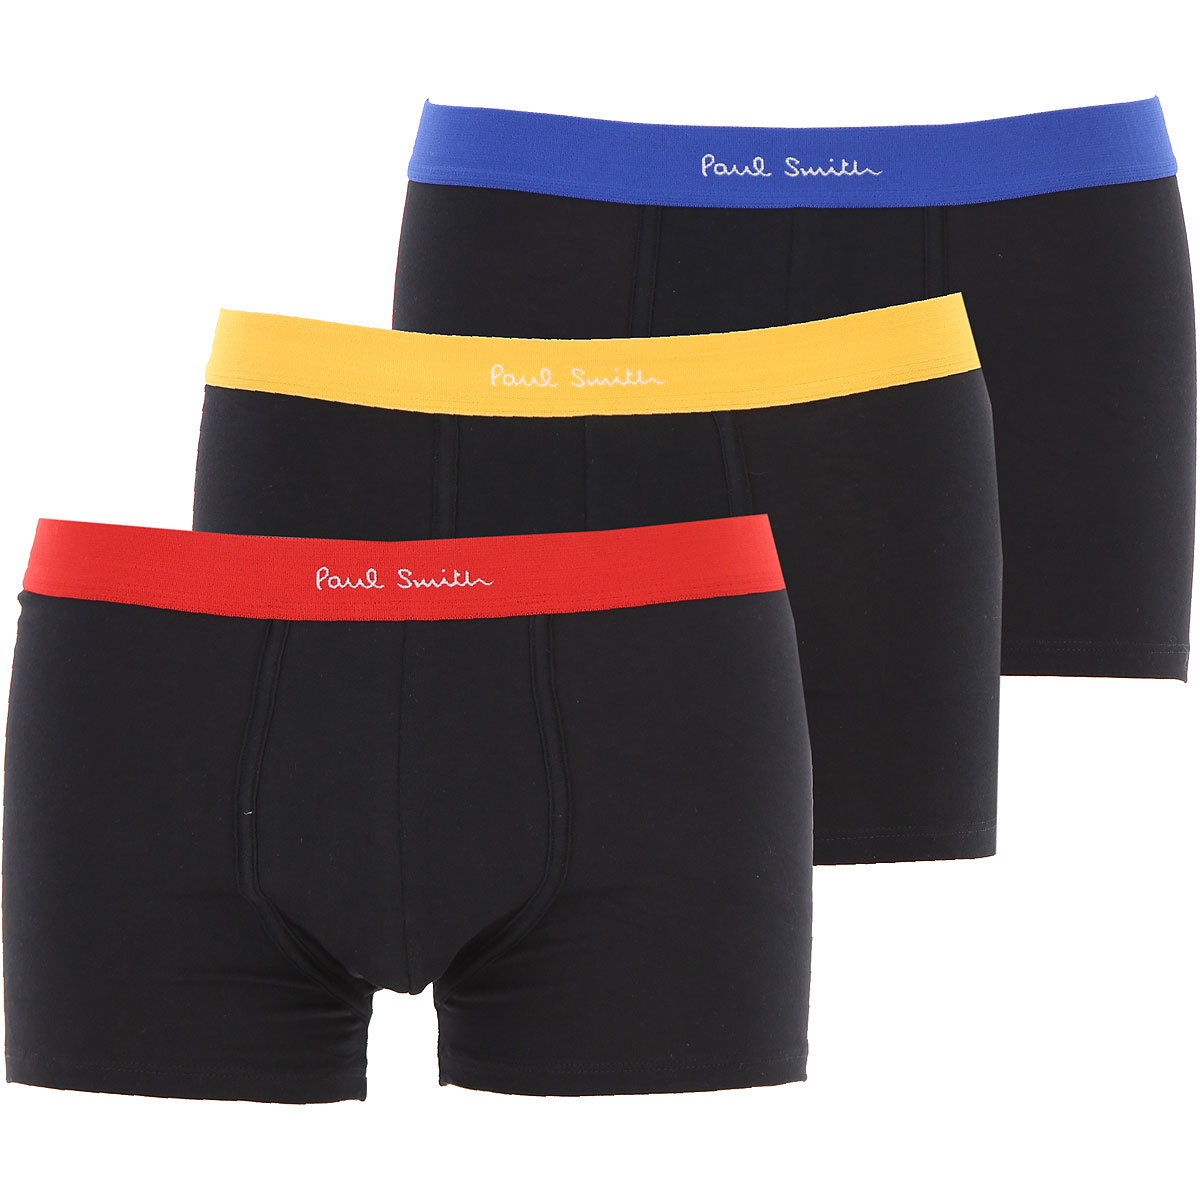 Mens Underwear Paul Smith, Style code: m1a-914c-a3pckc